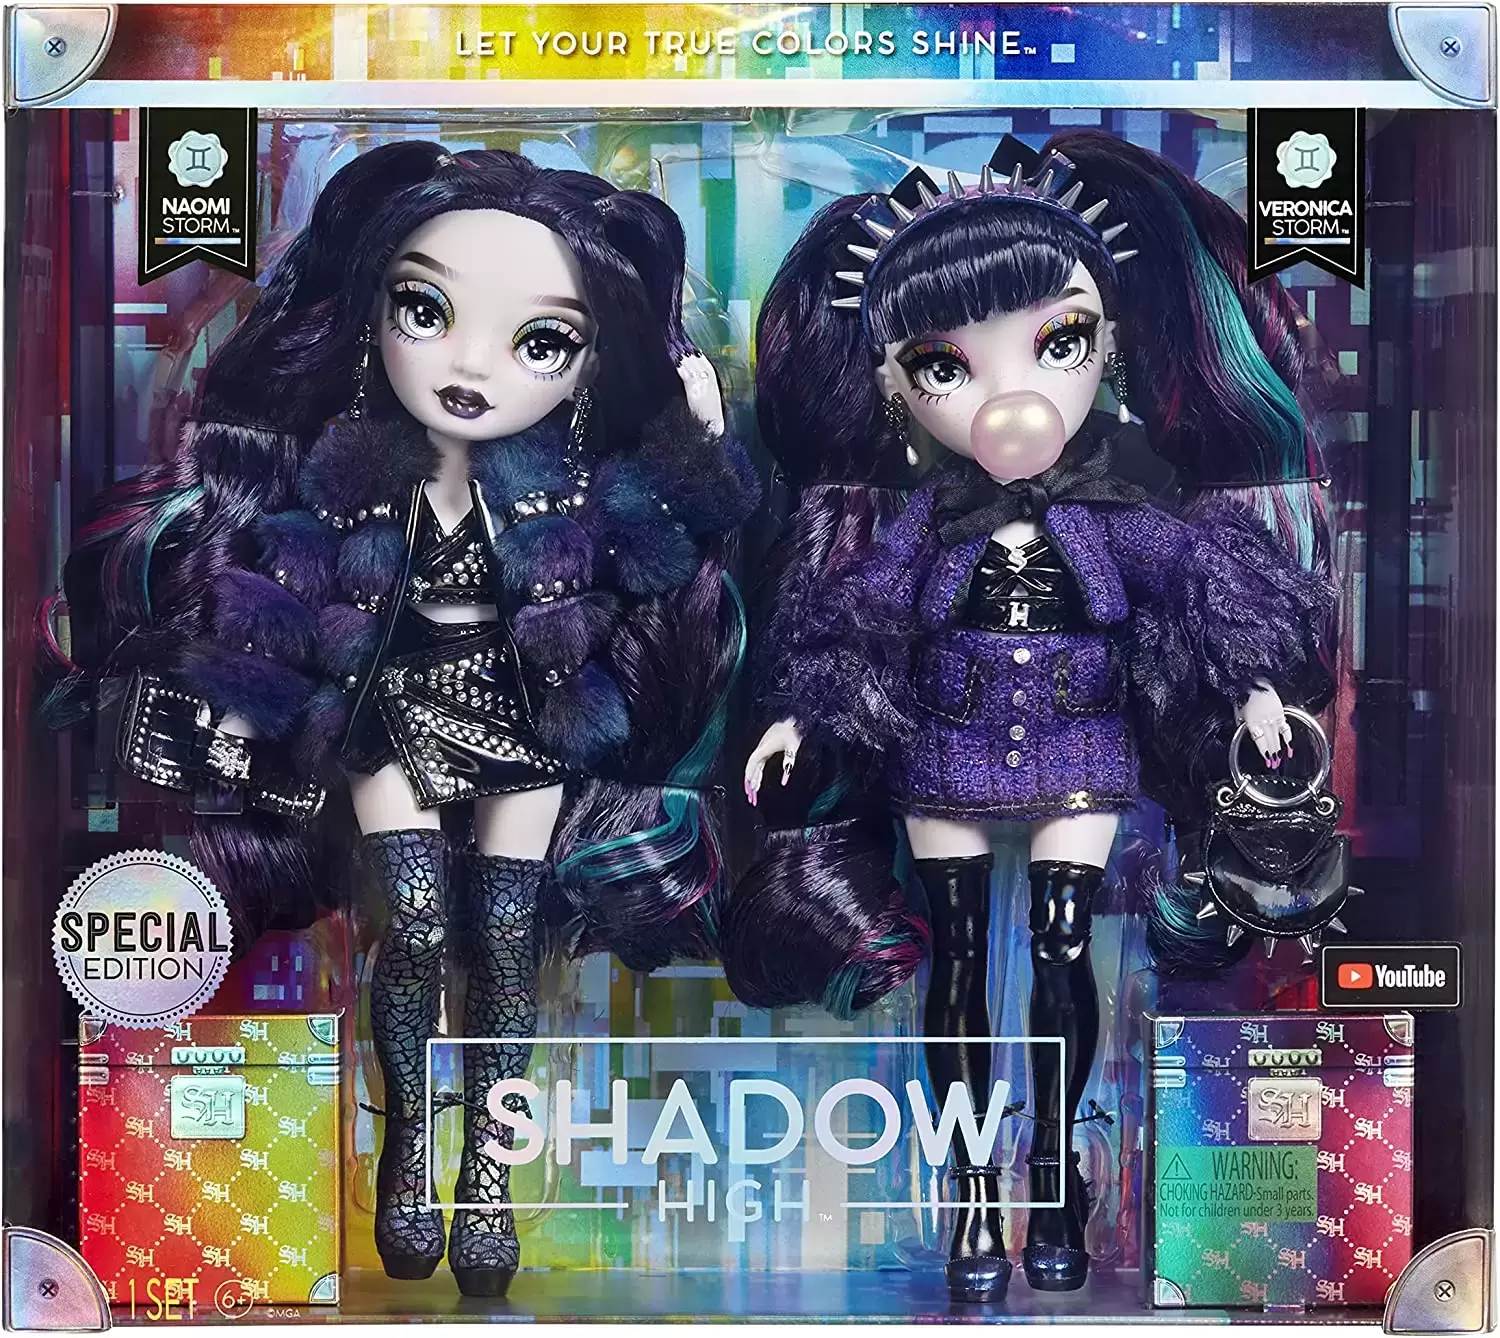 Naomi & Veronica Storm (Special Edition Twins) - Rainbow High doll